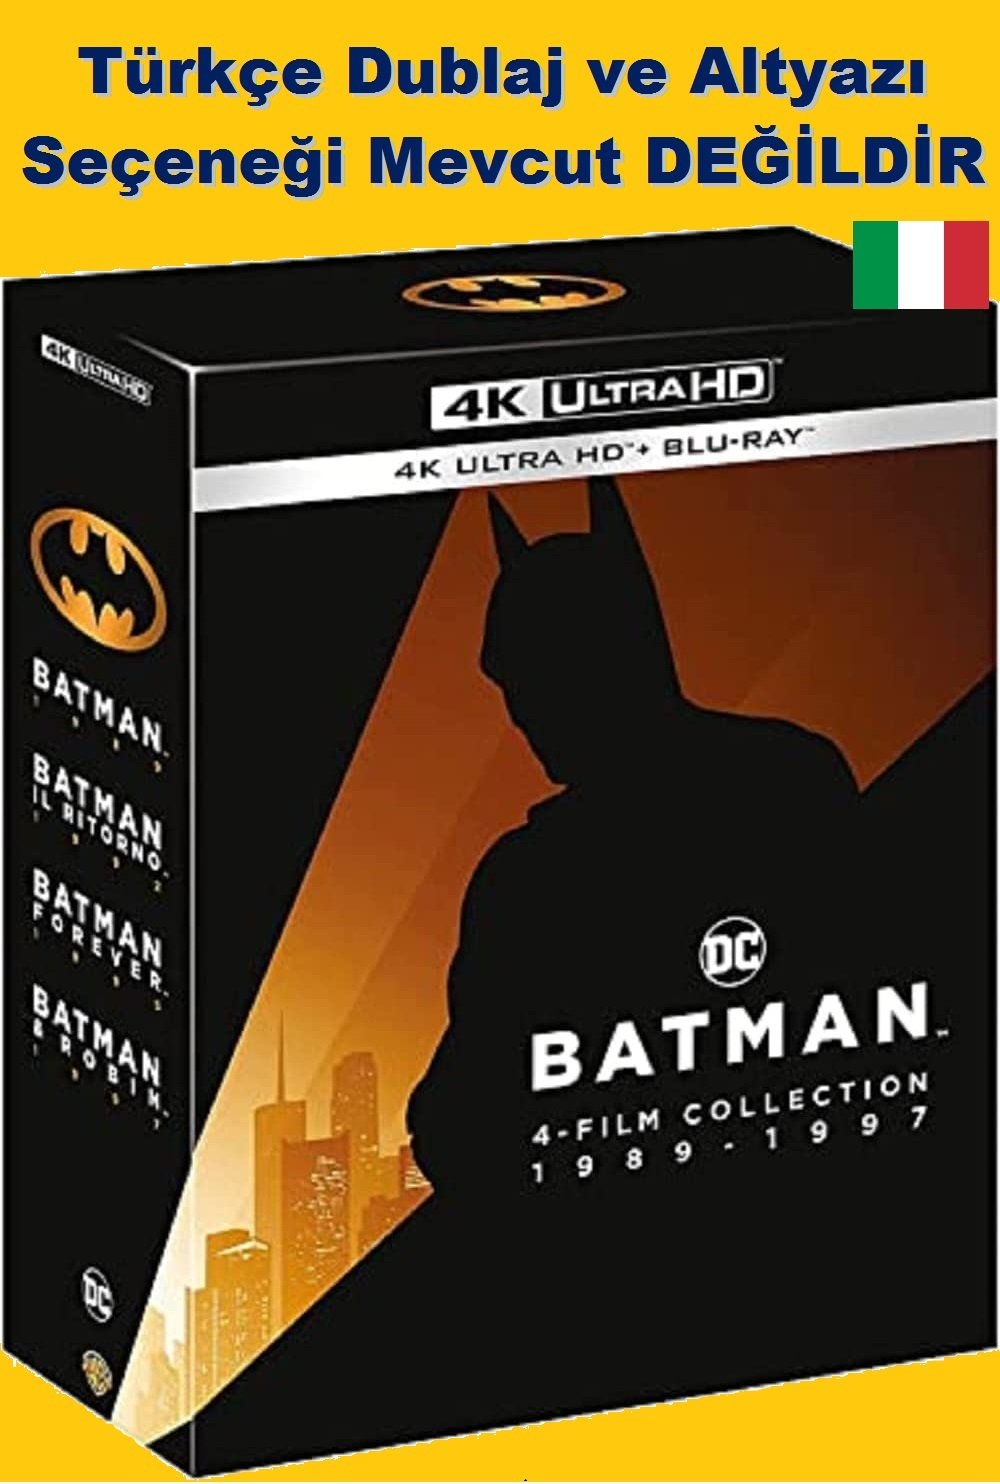 Batman 4 Film Collection 1989 - 1997 Boxset  4K Ultra HD + Blu-Ray 8 Disk